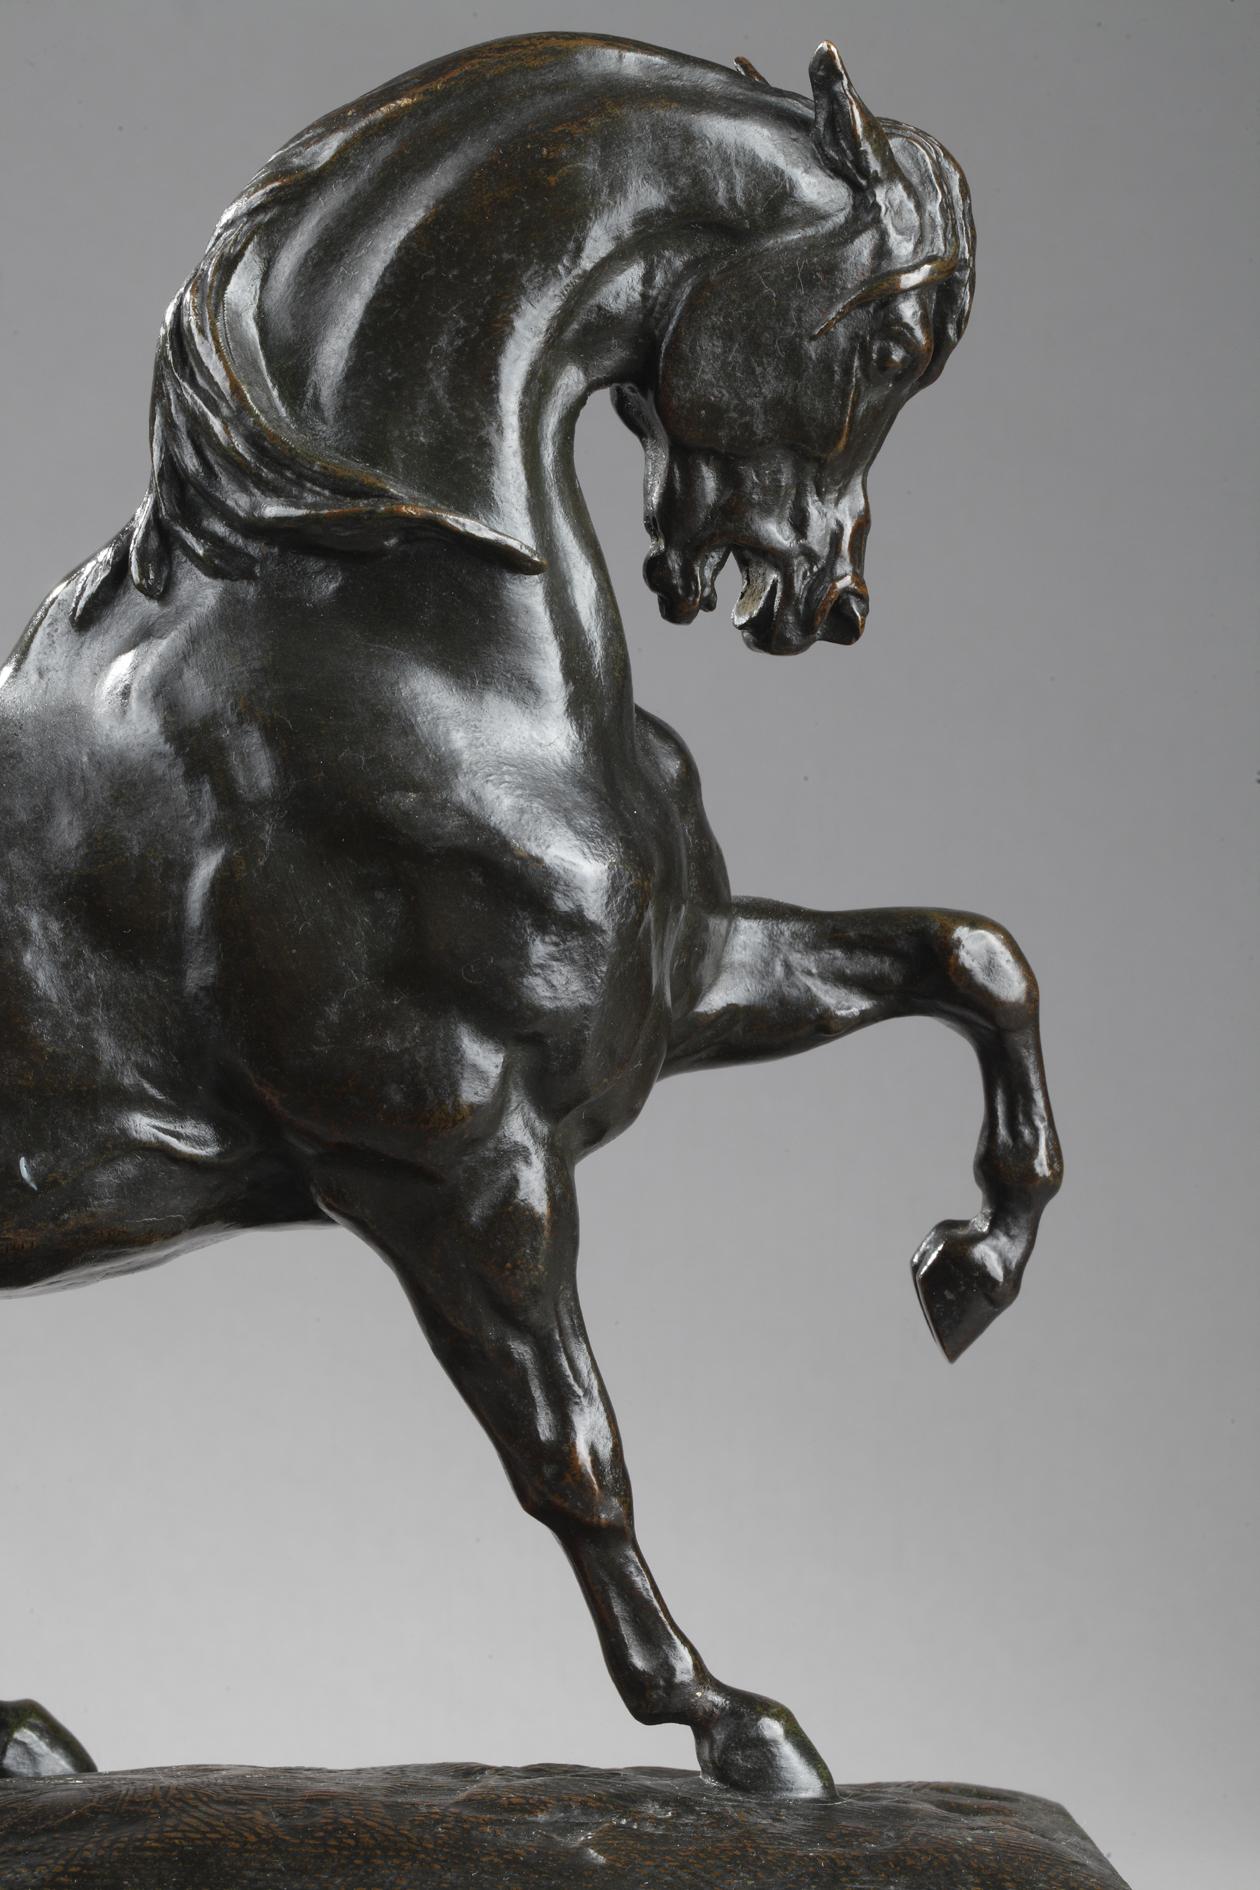 Turkish Horse - Sculpture by Antoine-Louis Barye